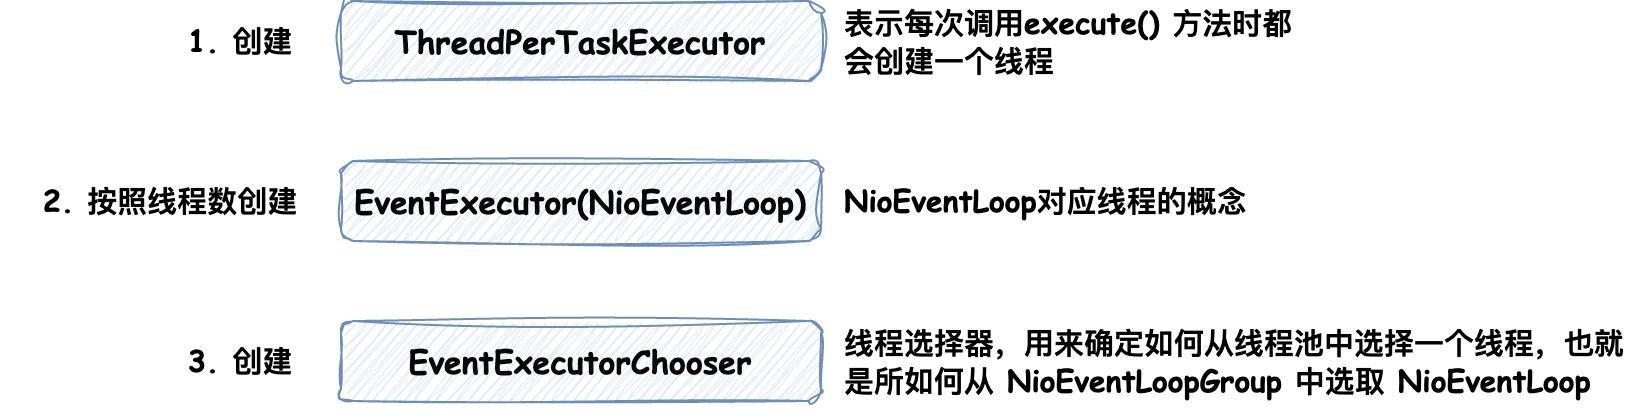 NioEventLoopGroup构造方法.jpg